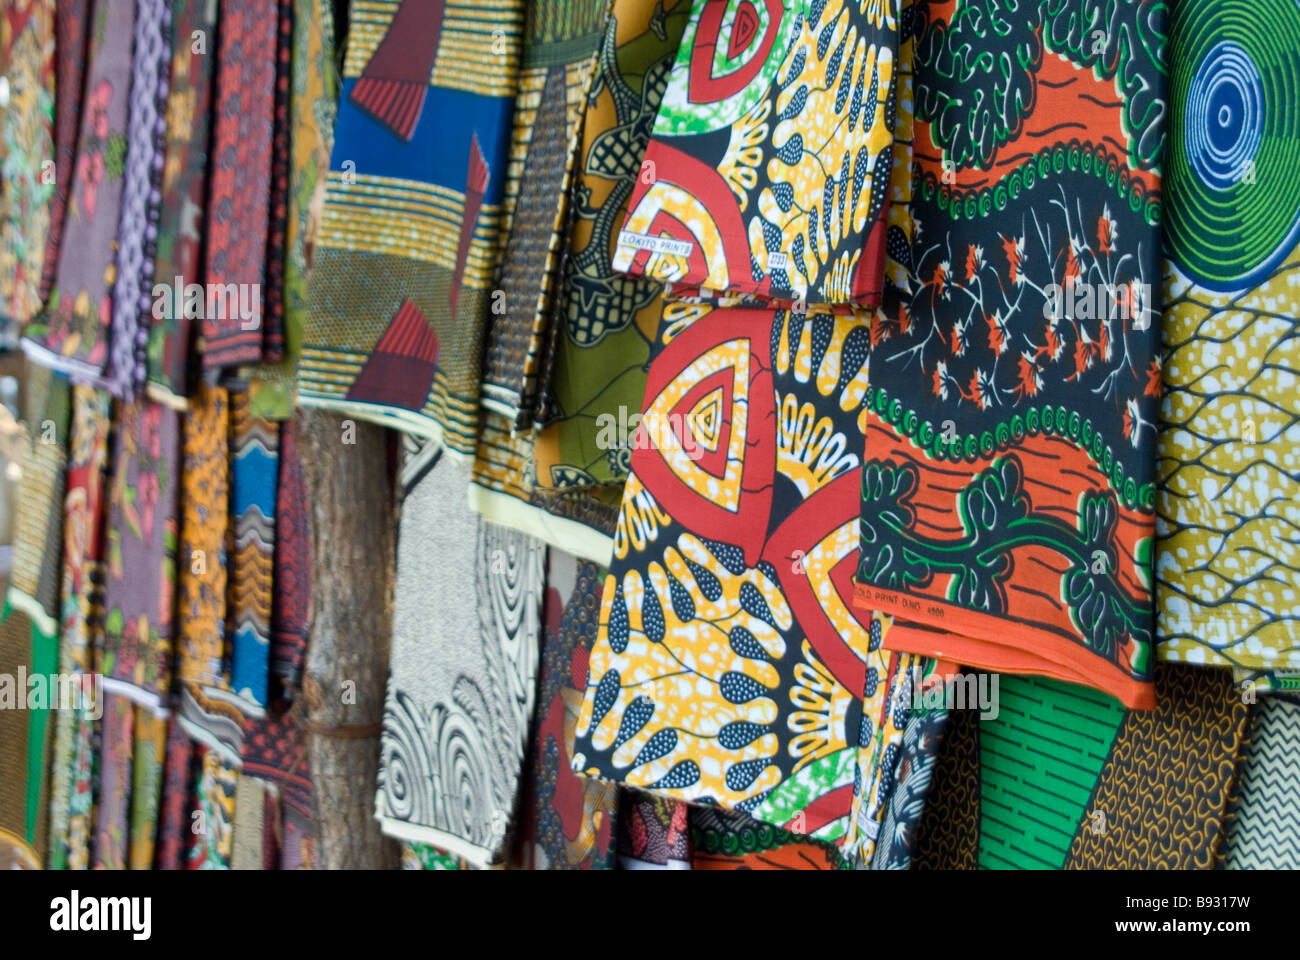 Fabric market stall in Livingstone, Zambia Stock Photo